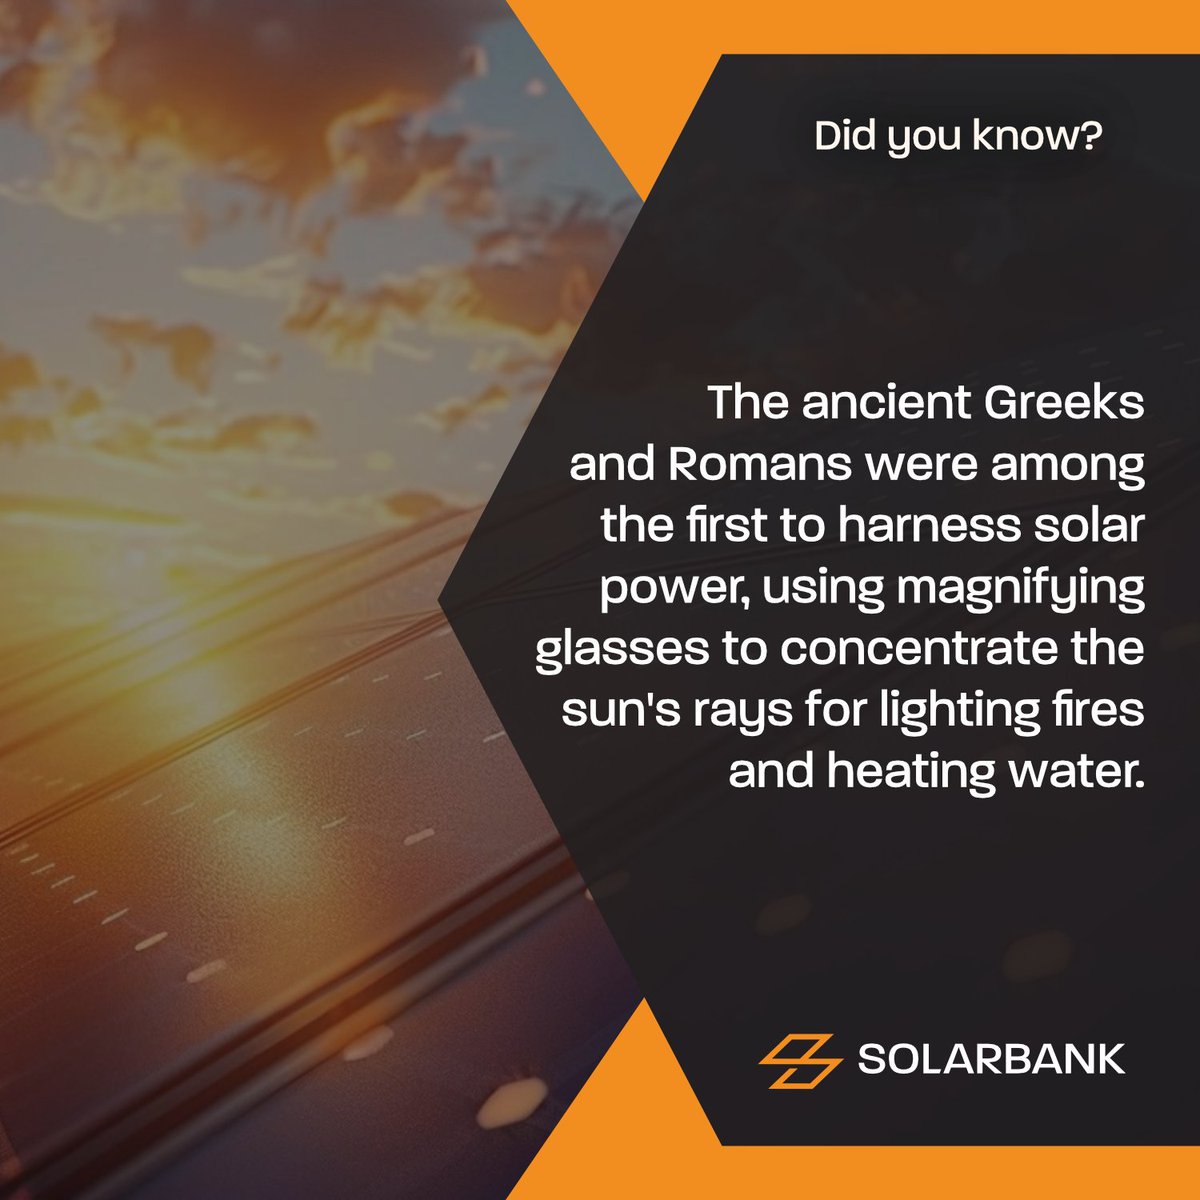 Early solar power pioneers..
#solarhistory #greenfuture #solarpower #didyouknow